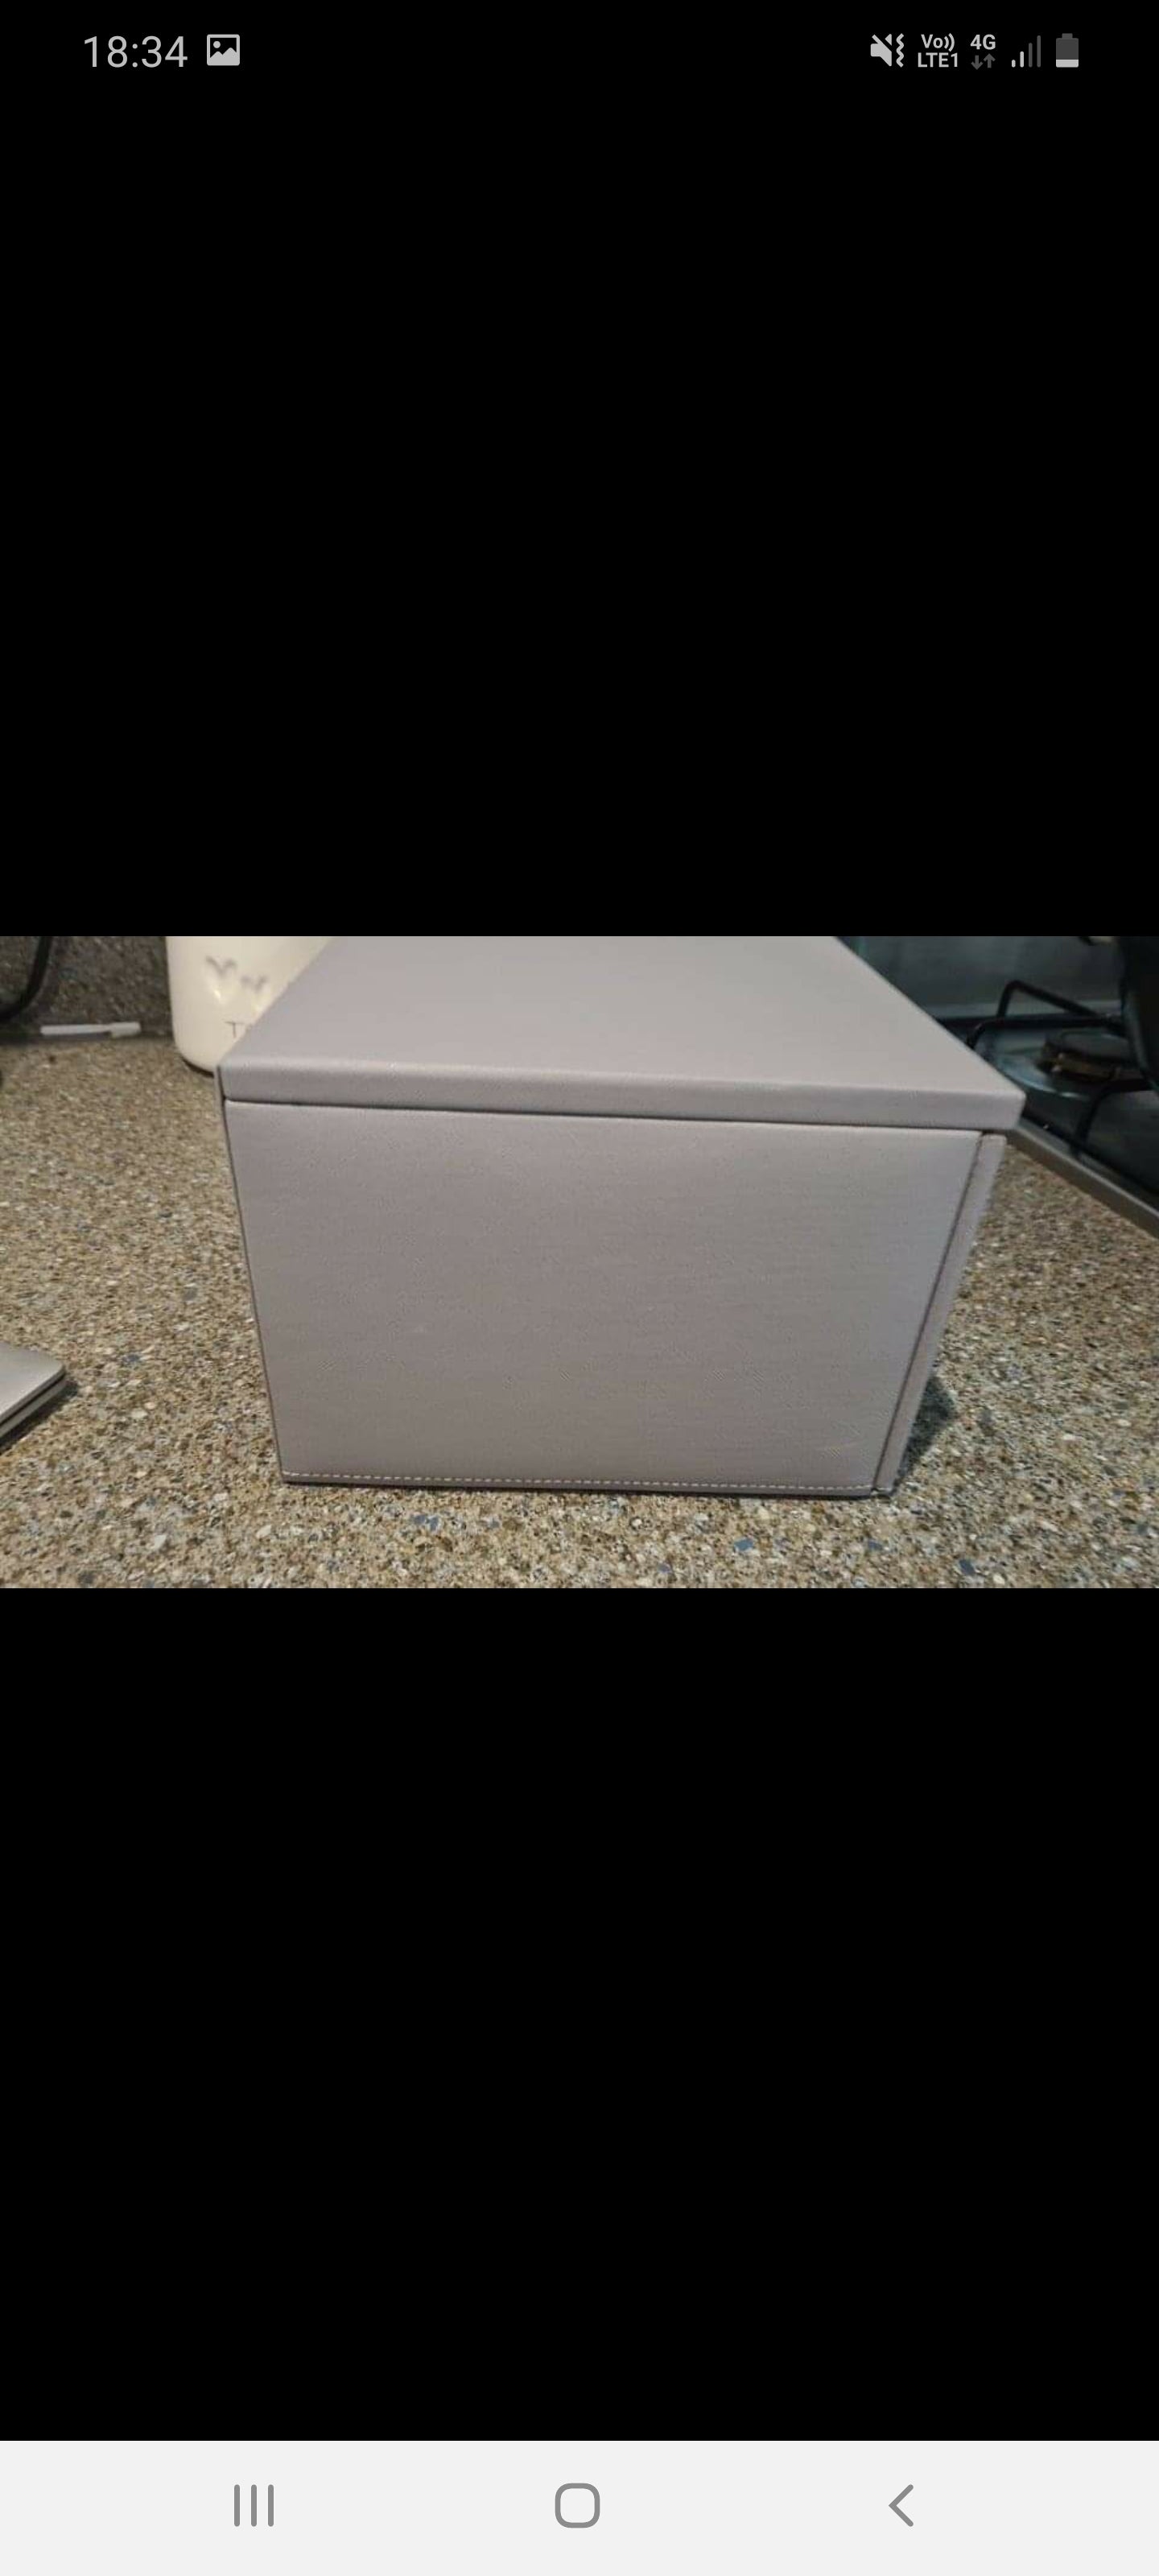 Genuine Pandora Jewellery box grey with 3 layers